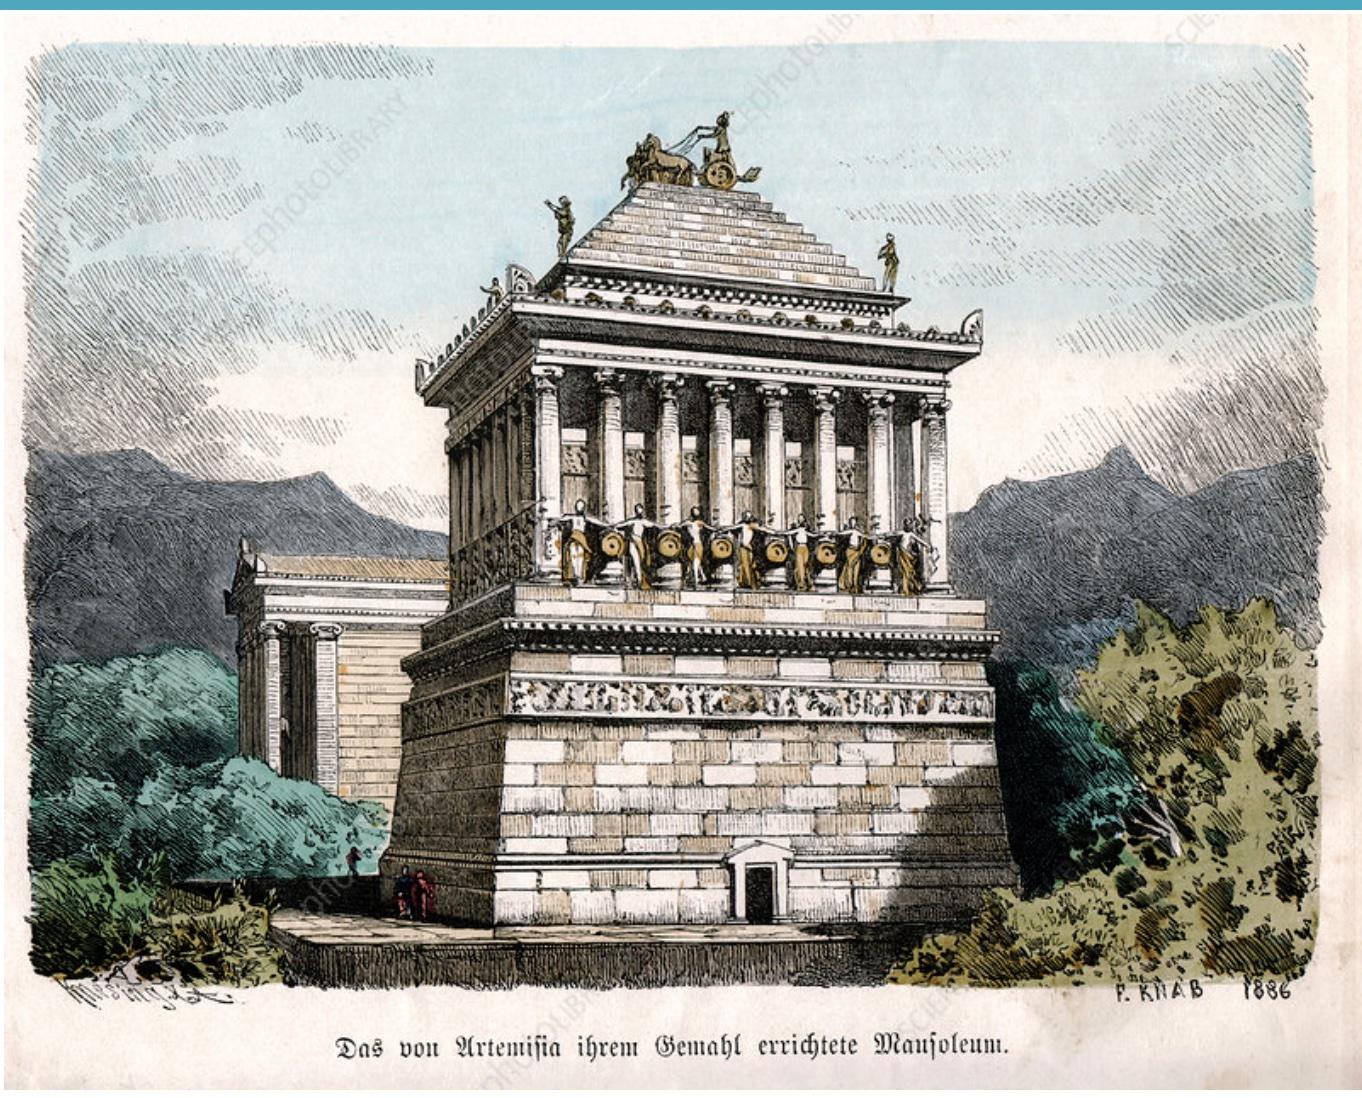 mausoleum.jpg